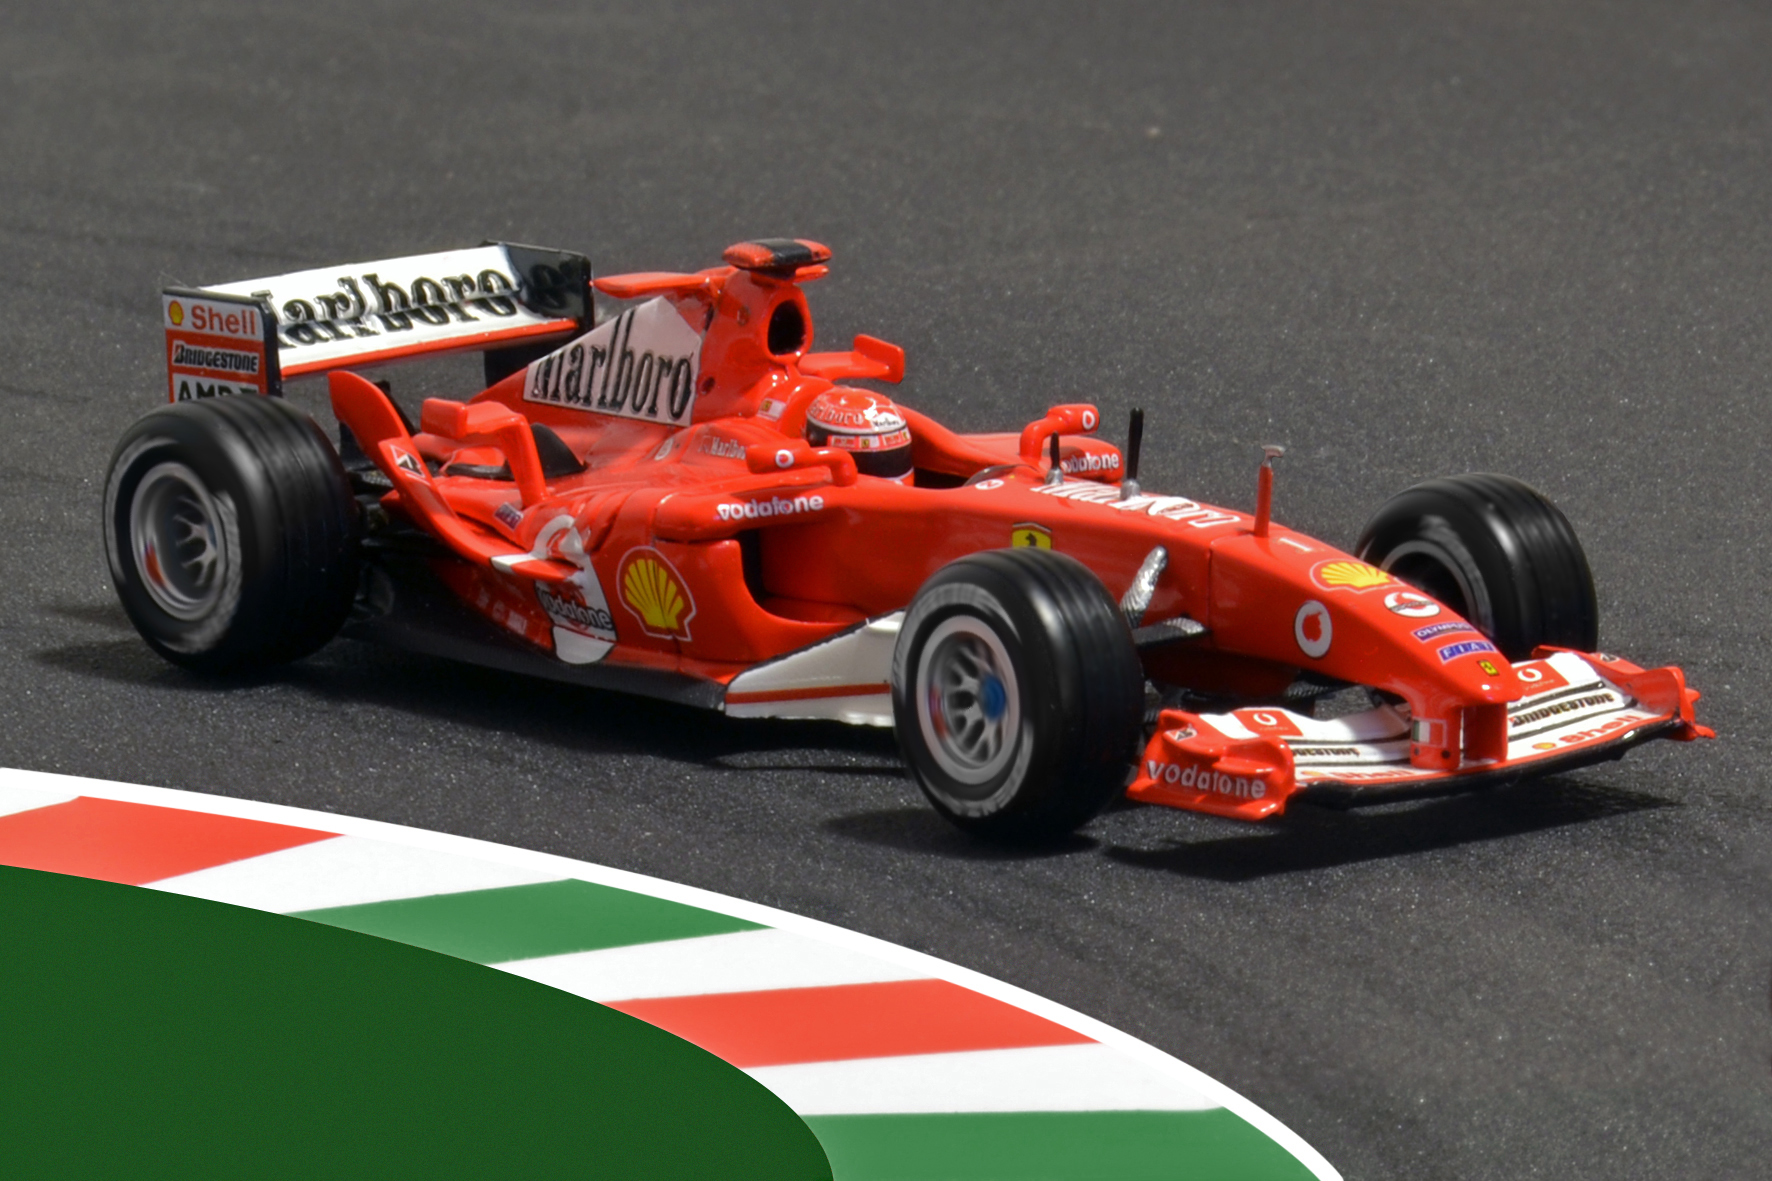 Ferrari F2004 Michael Schumacher 2004 - Hot Wheels 1:43